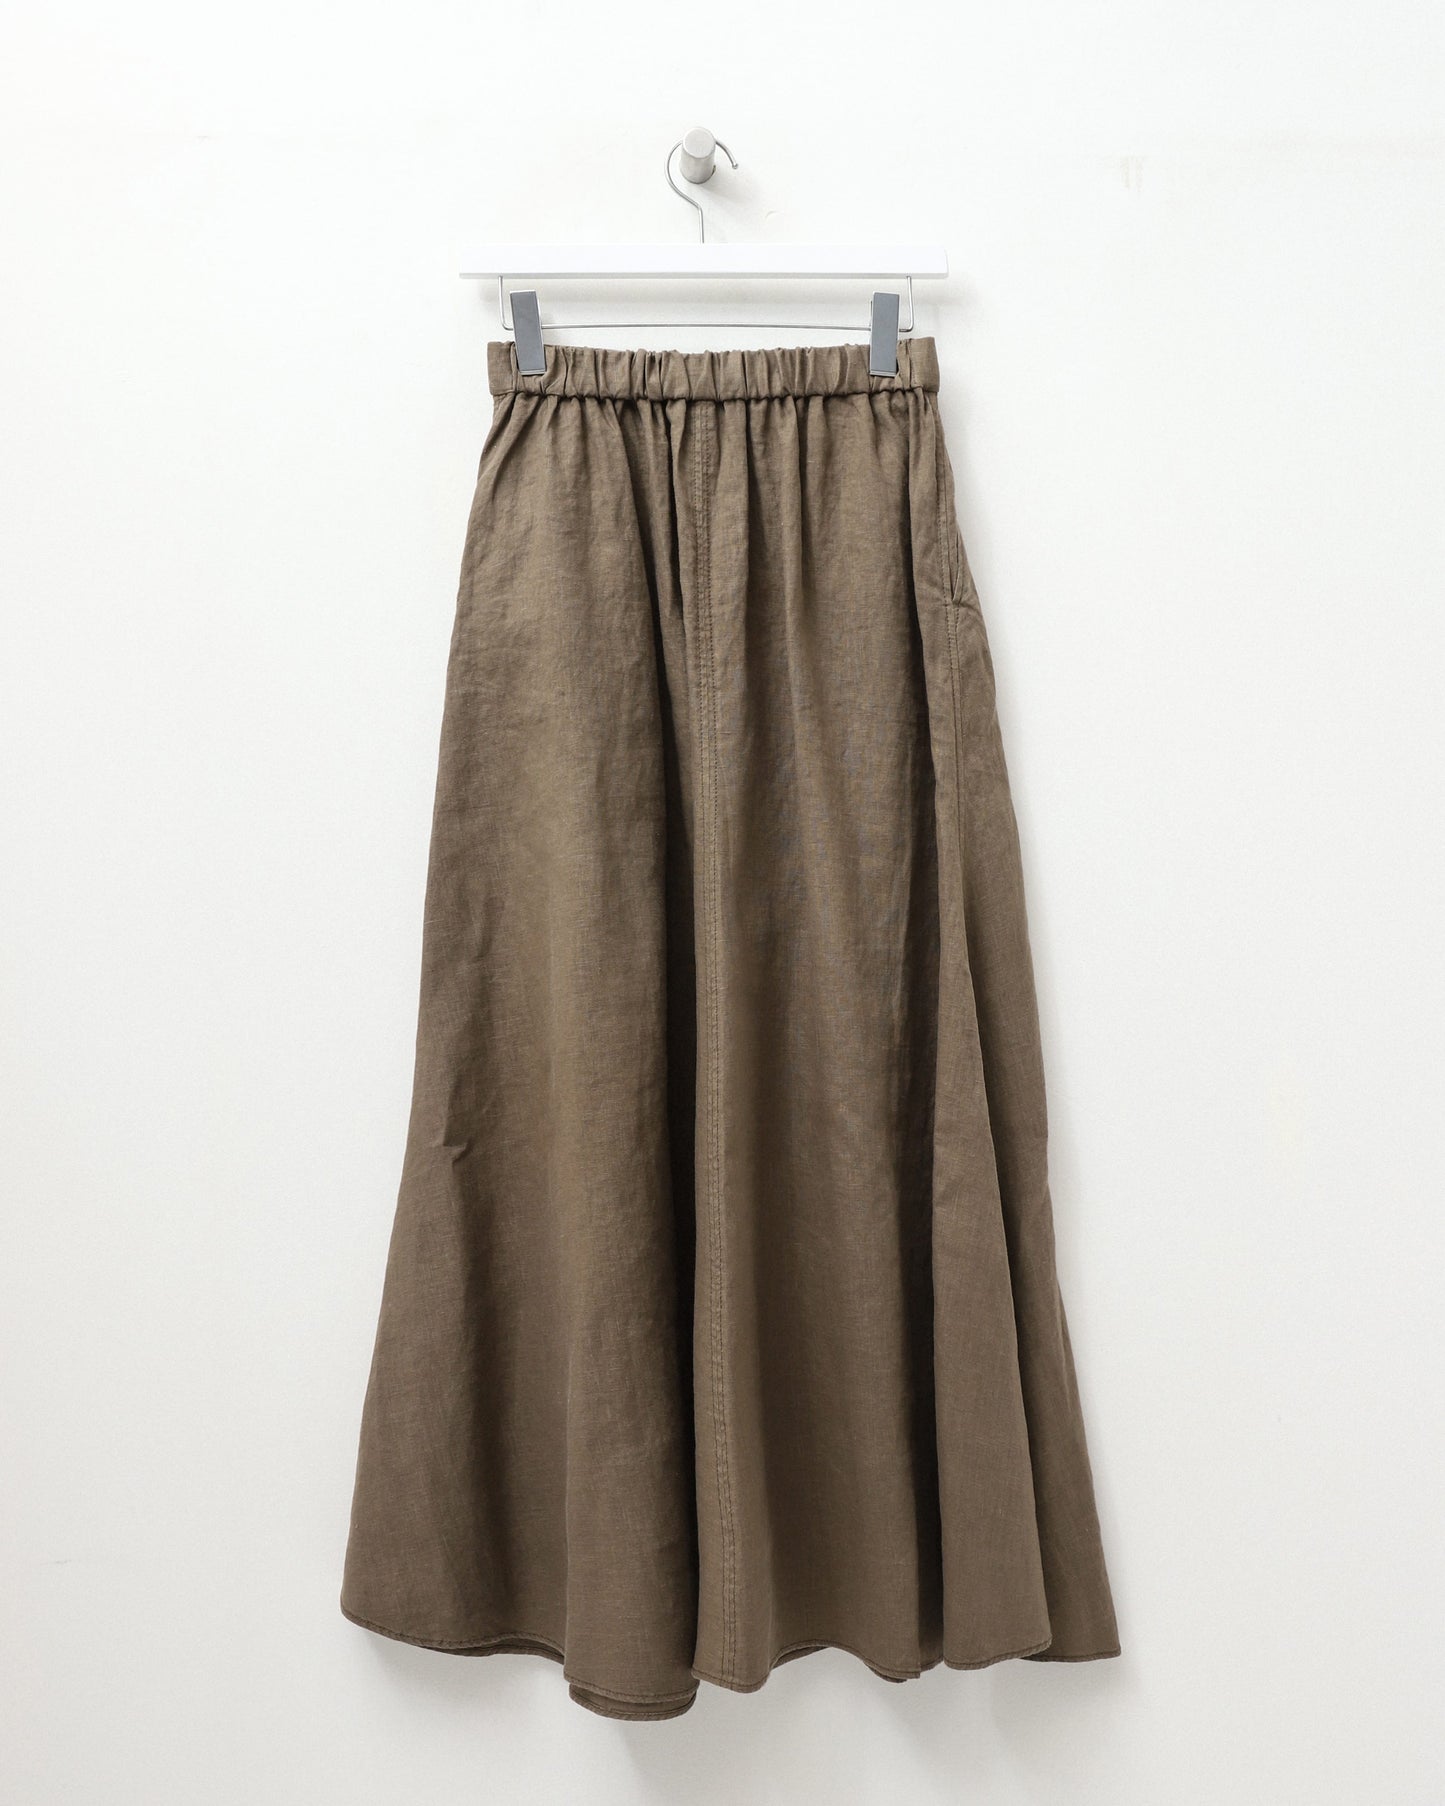 washed linen skirt